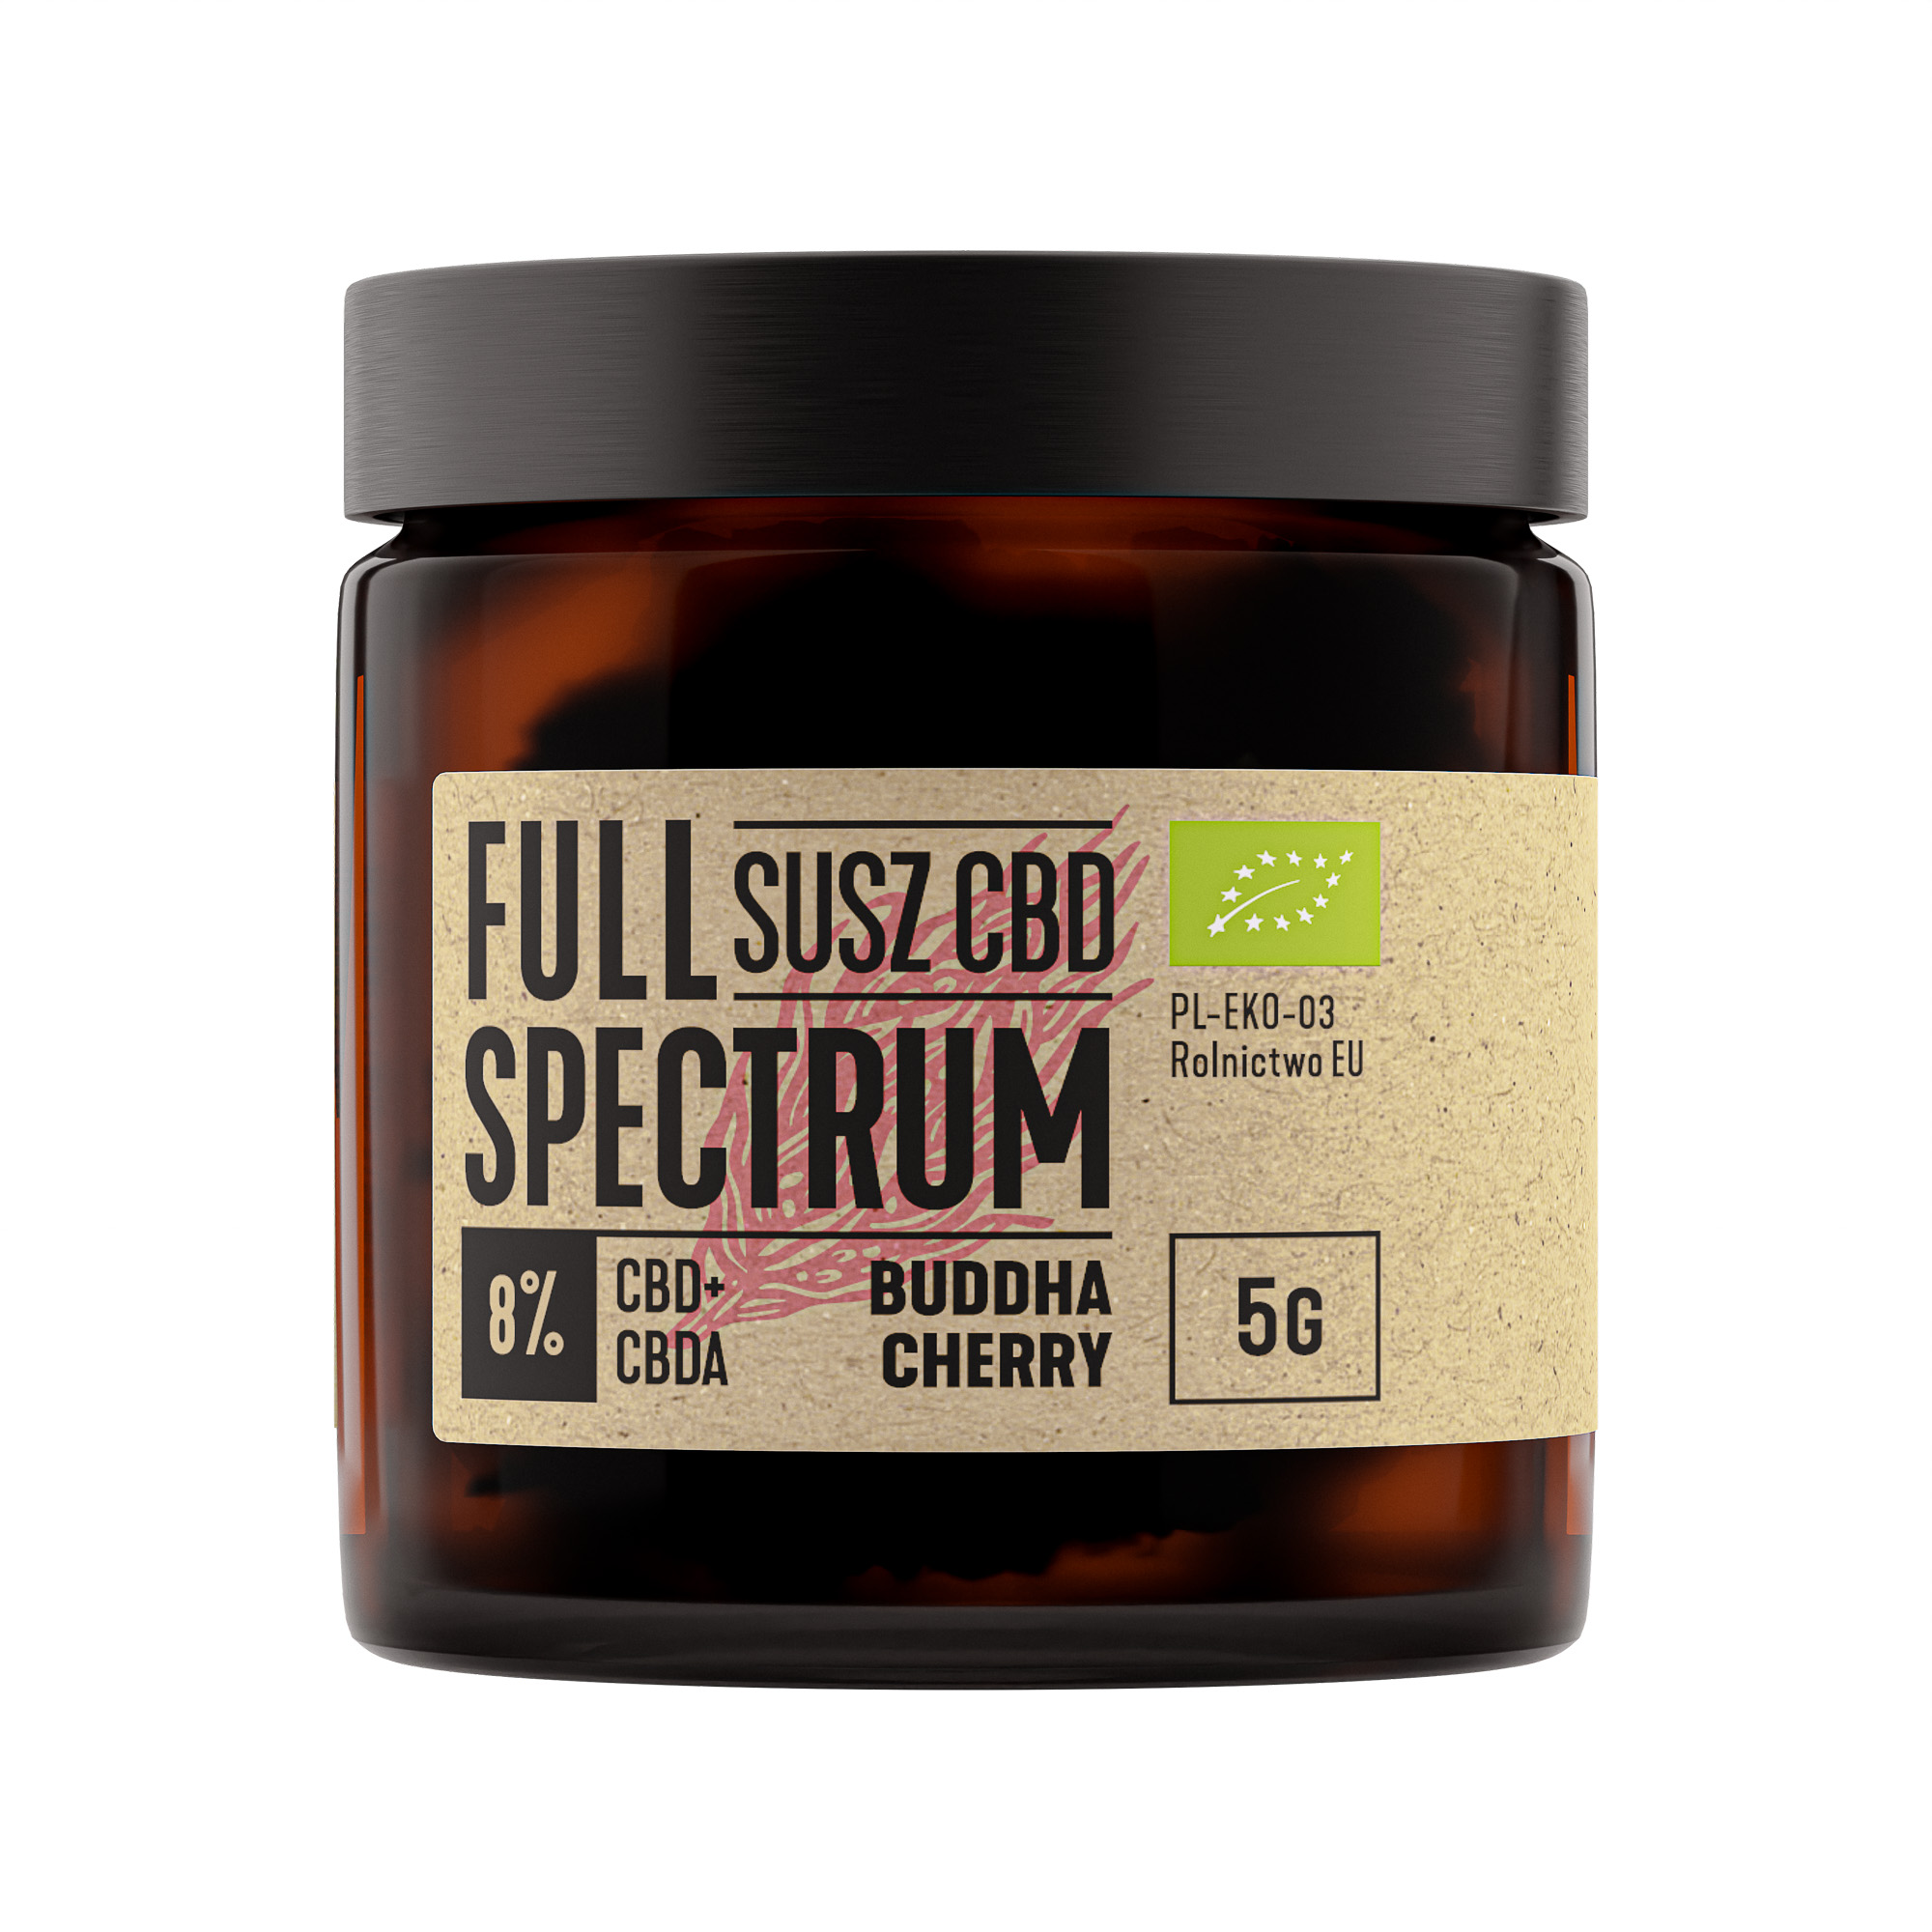 Full Spectrum Budda Cherry CBD >8% 5 g